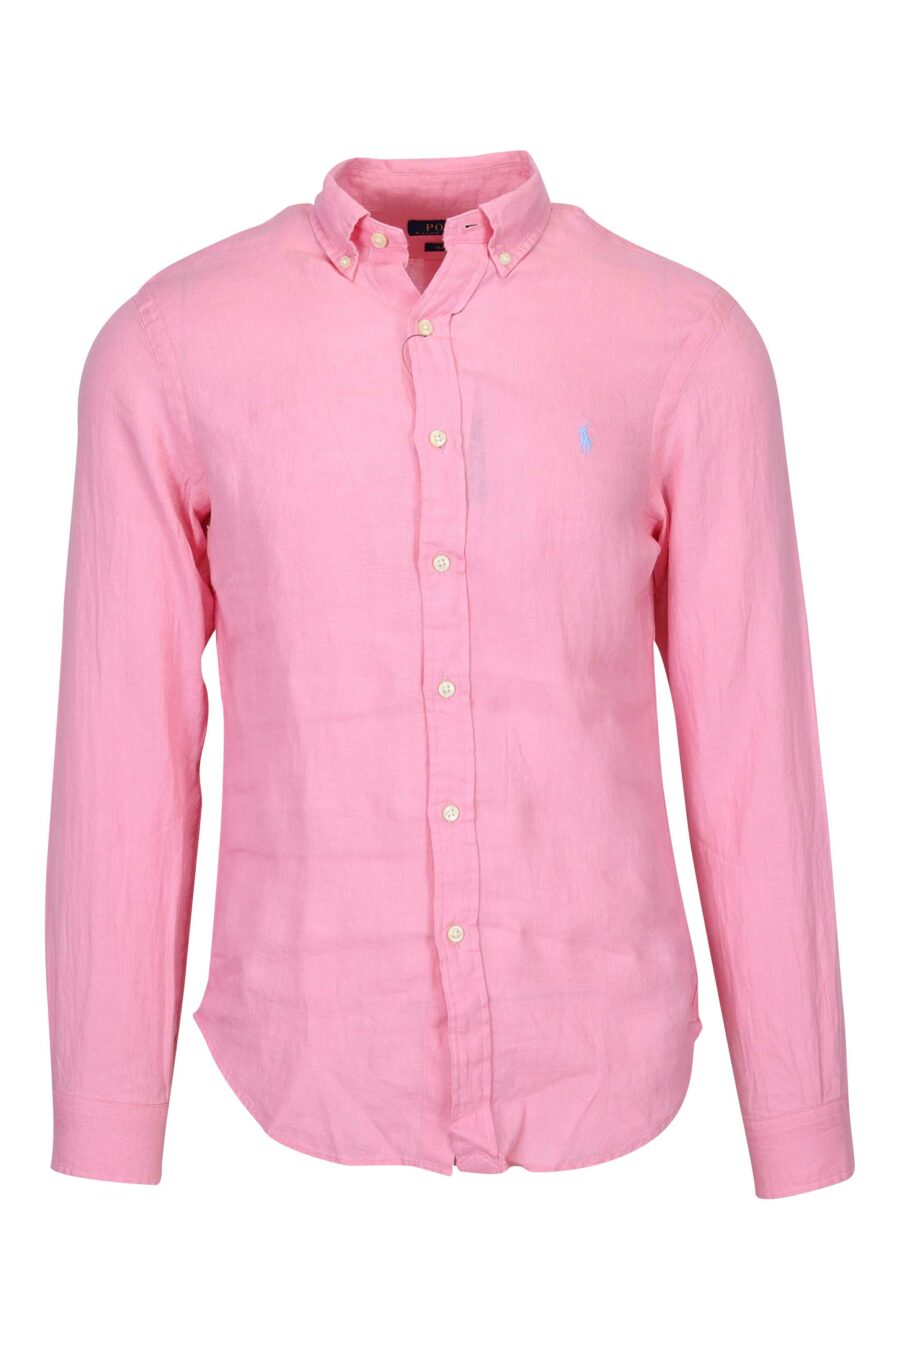 Camisa cor-de-rosa com mini-logotipo "polo" - 3616535874473